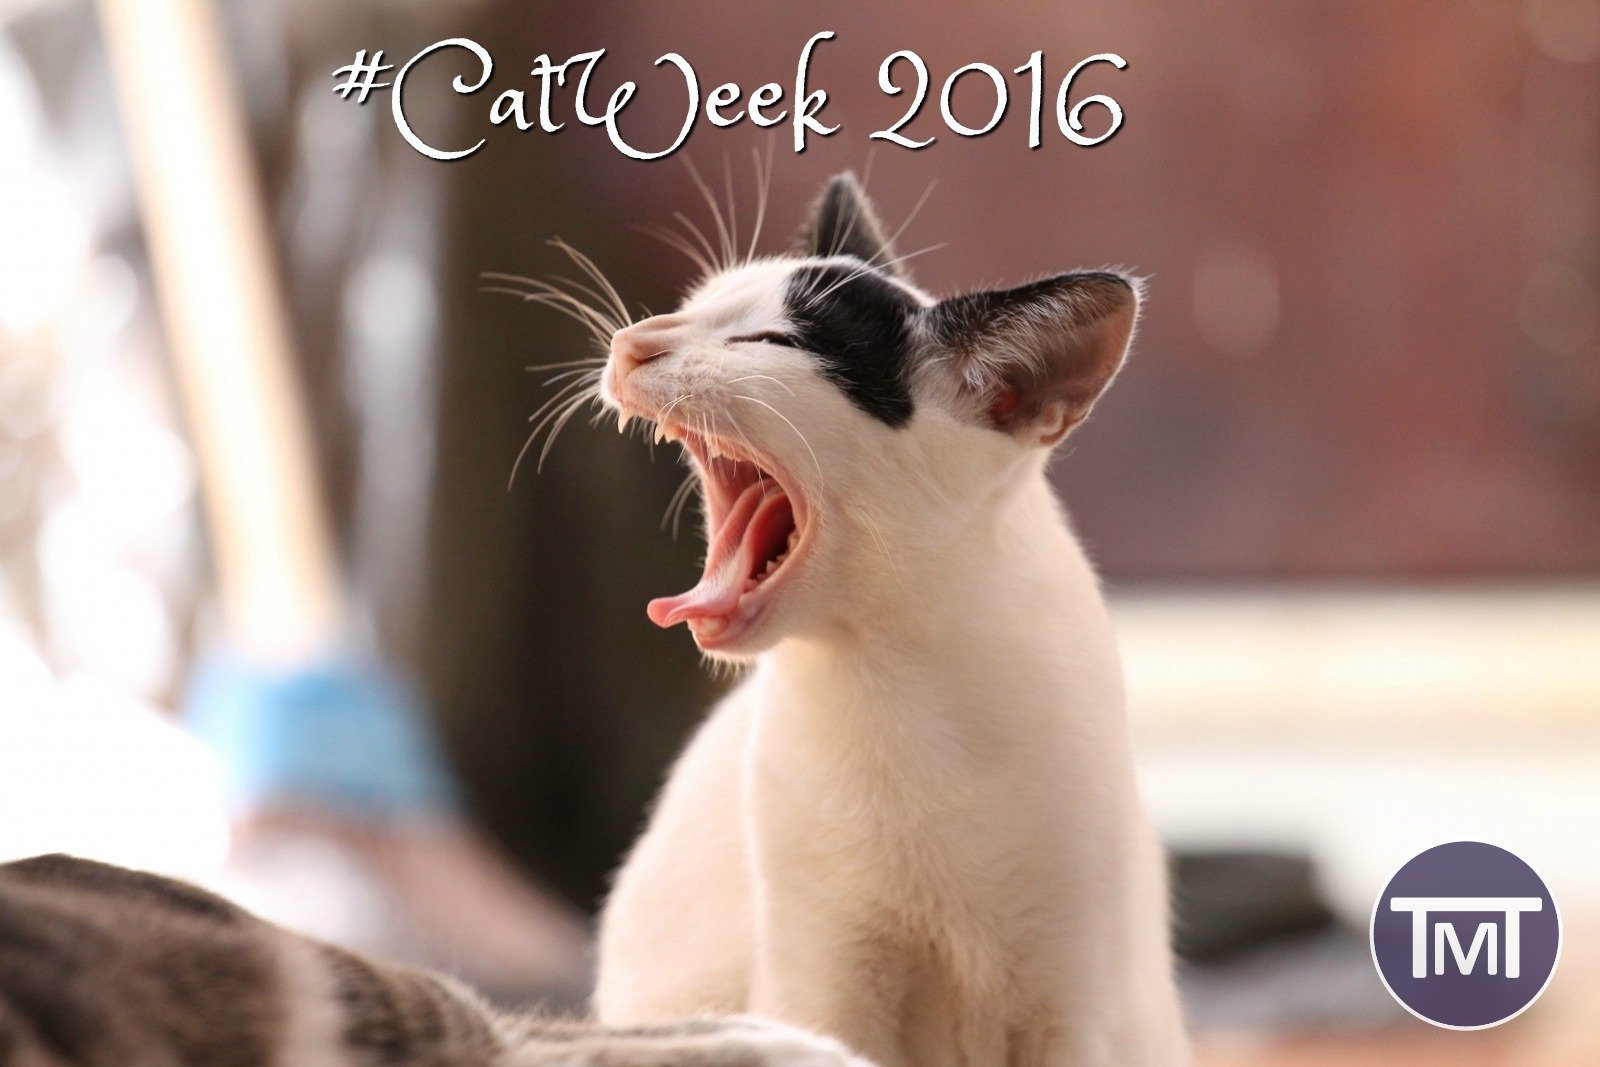 #Catweek2016 feature image